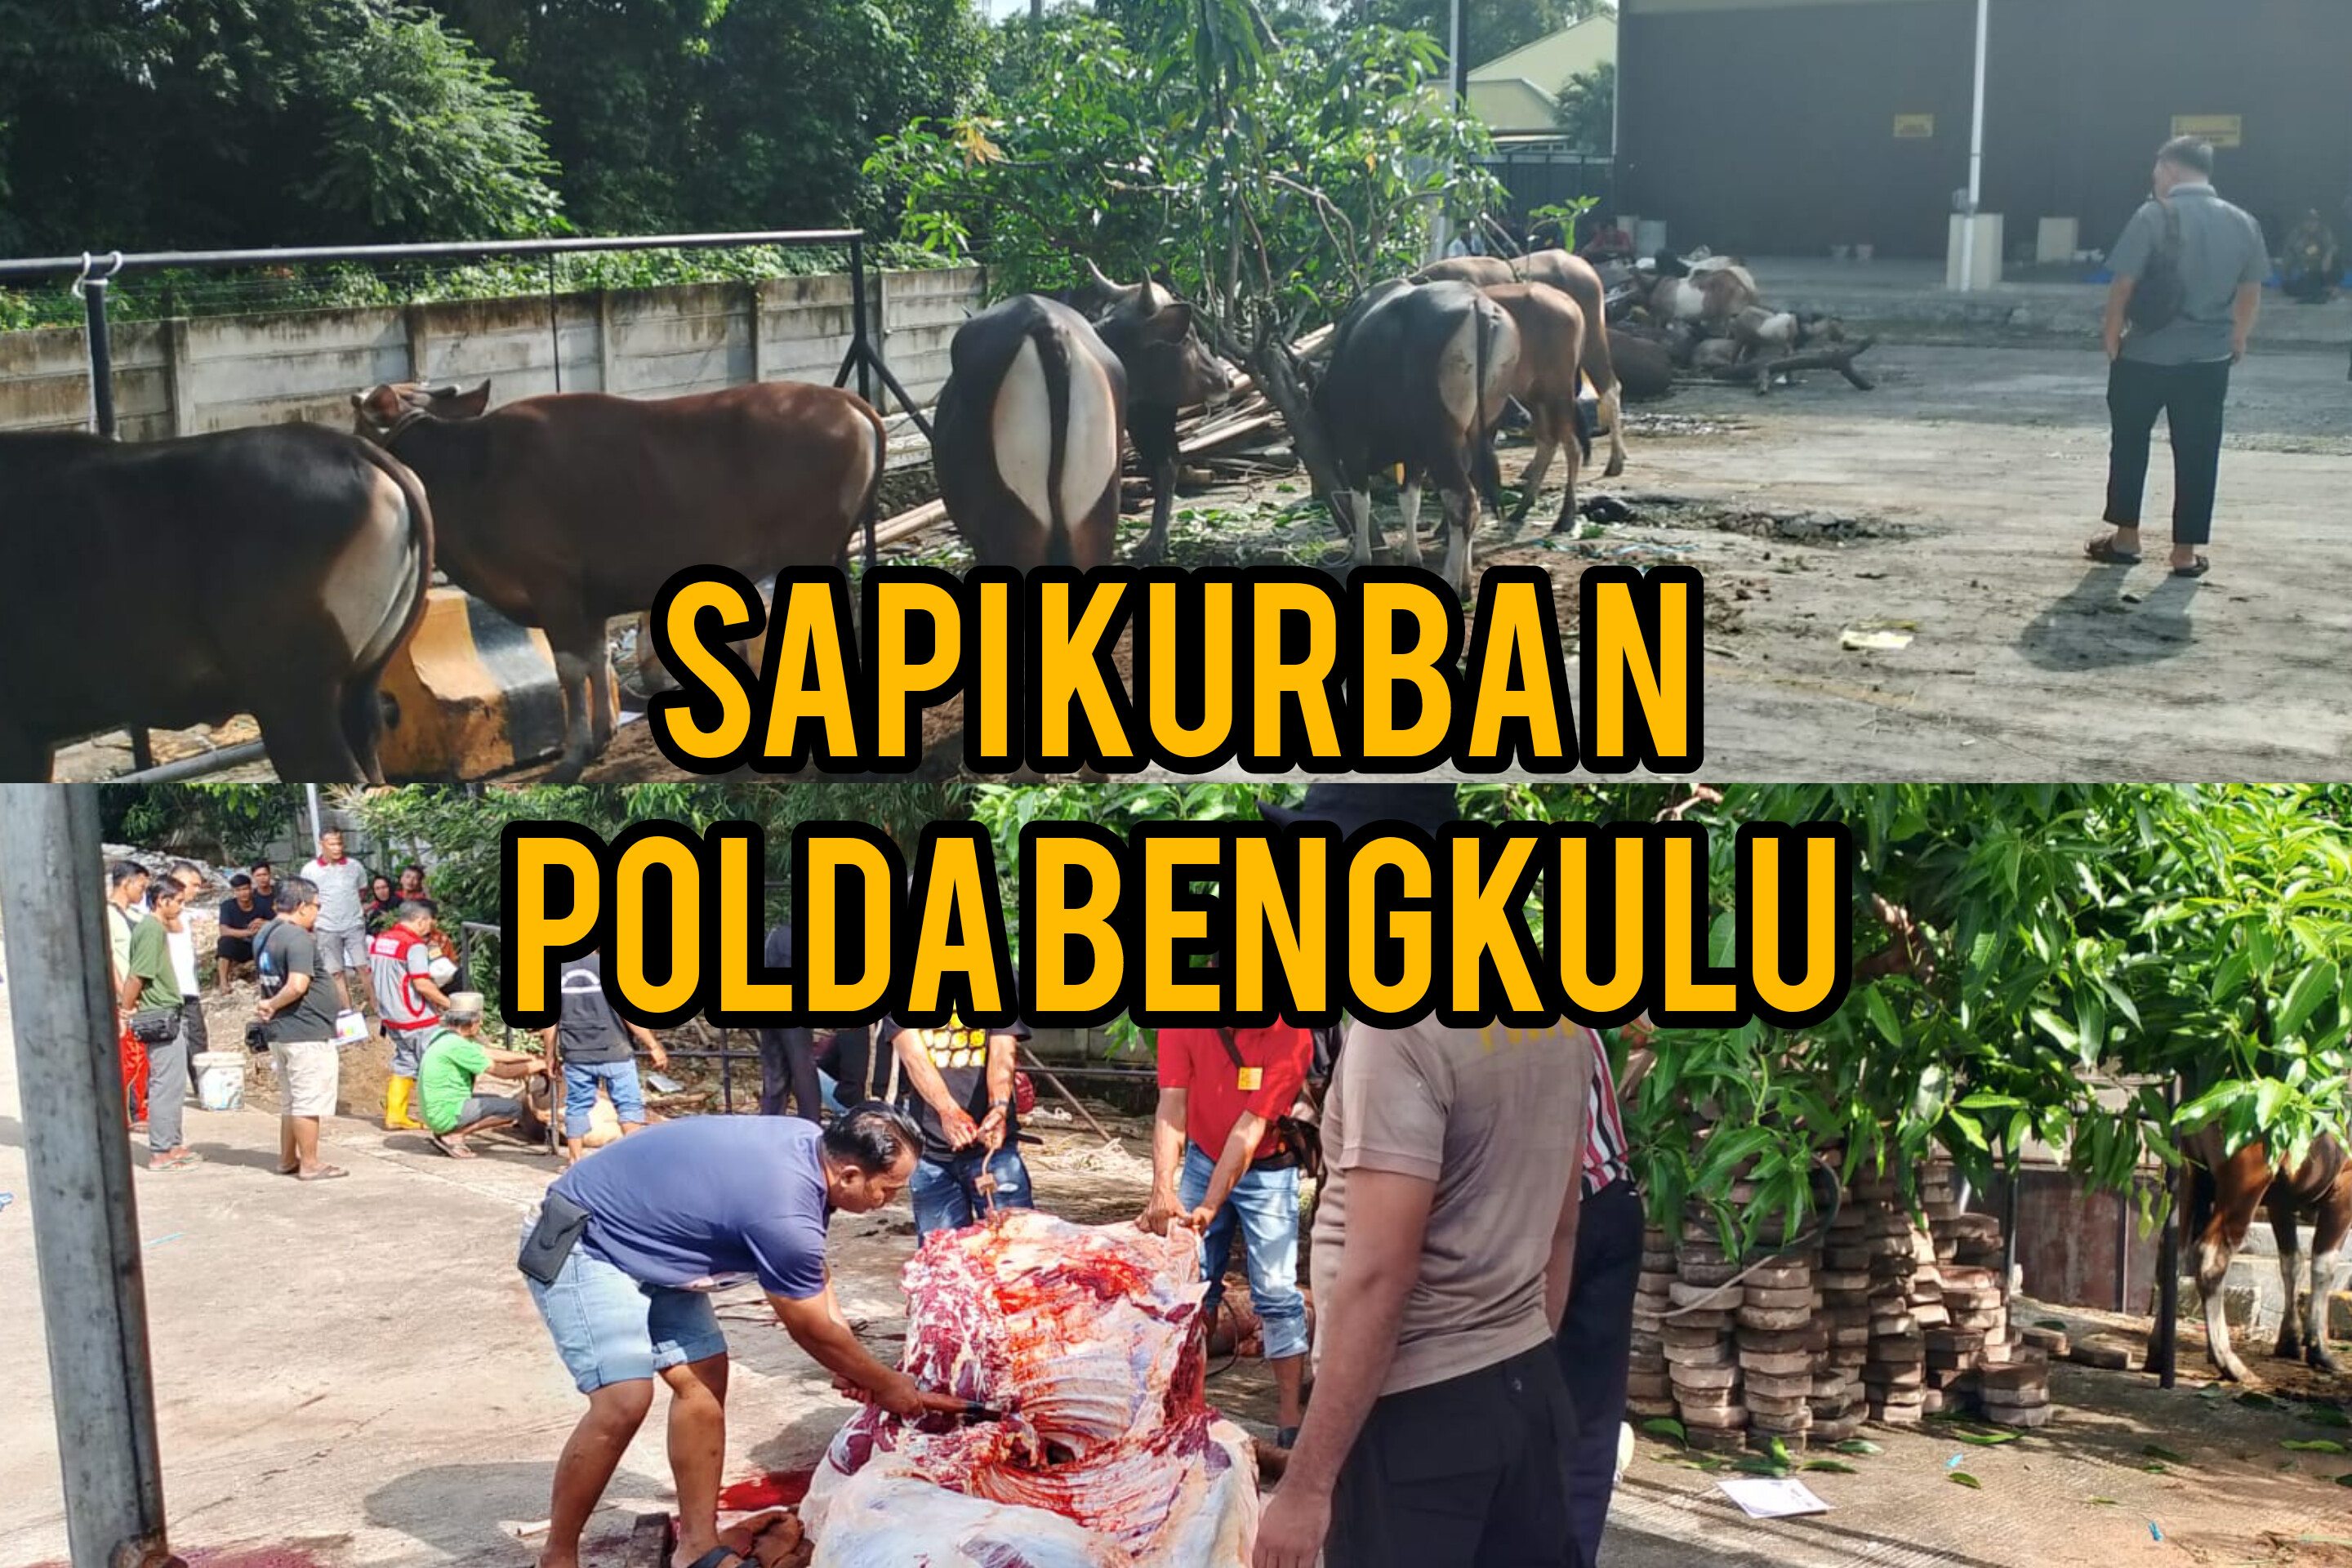 35 Hewan Kurban Disembelih Polda Bengkulu pada Hari Raya Idul Adha, Dagingnya Dibagikan ke Masyarakat 